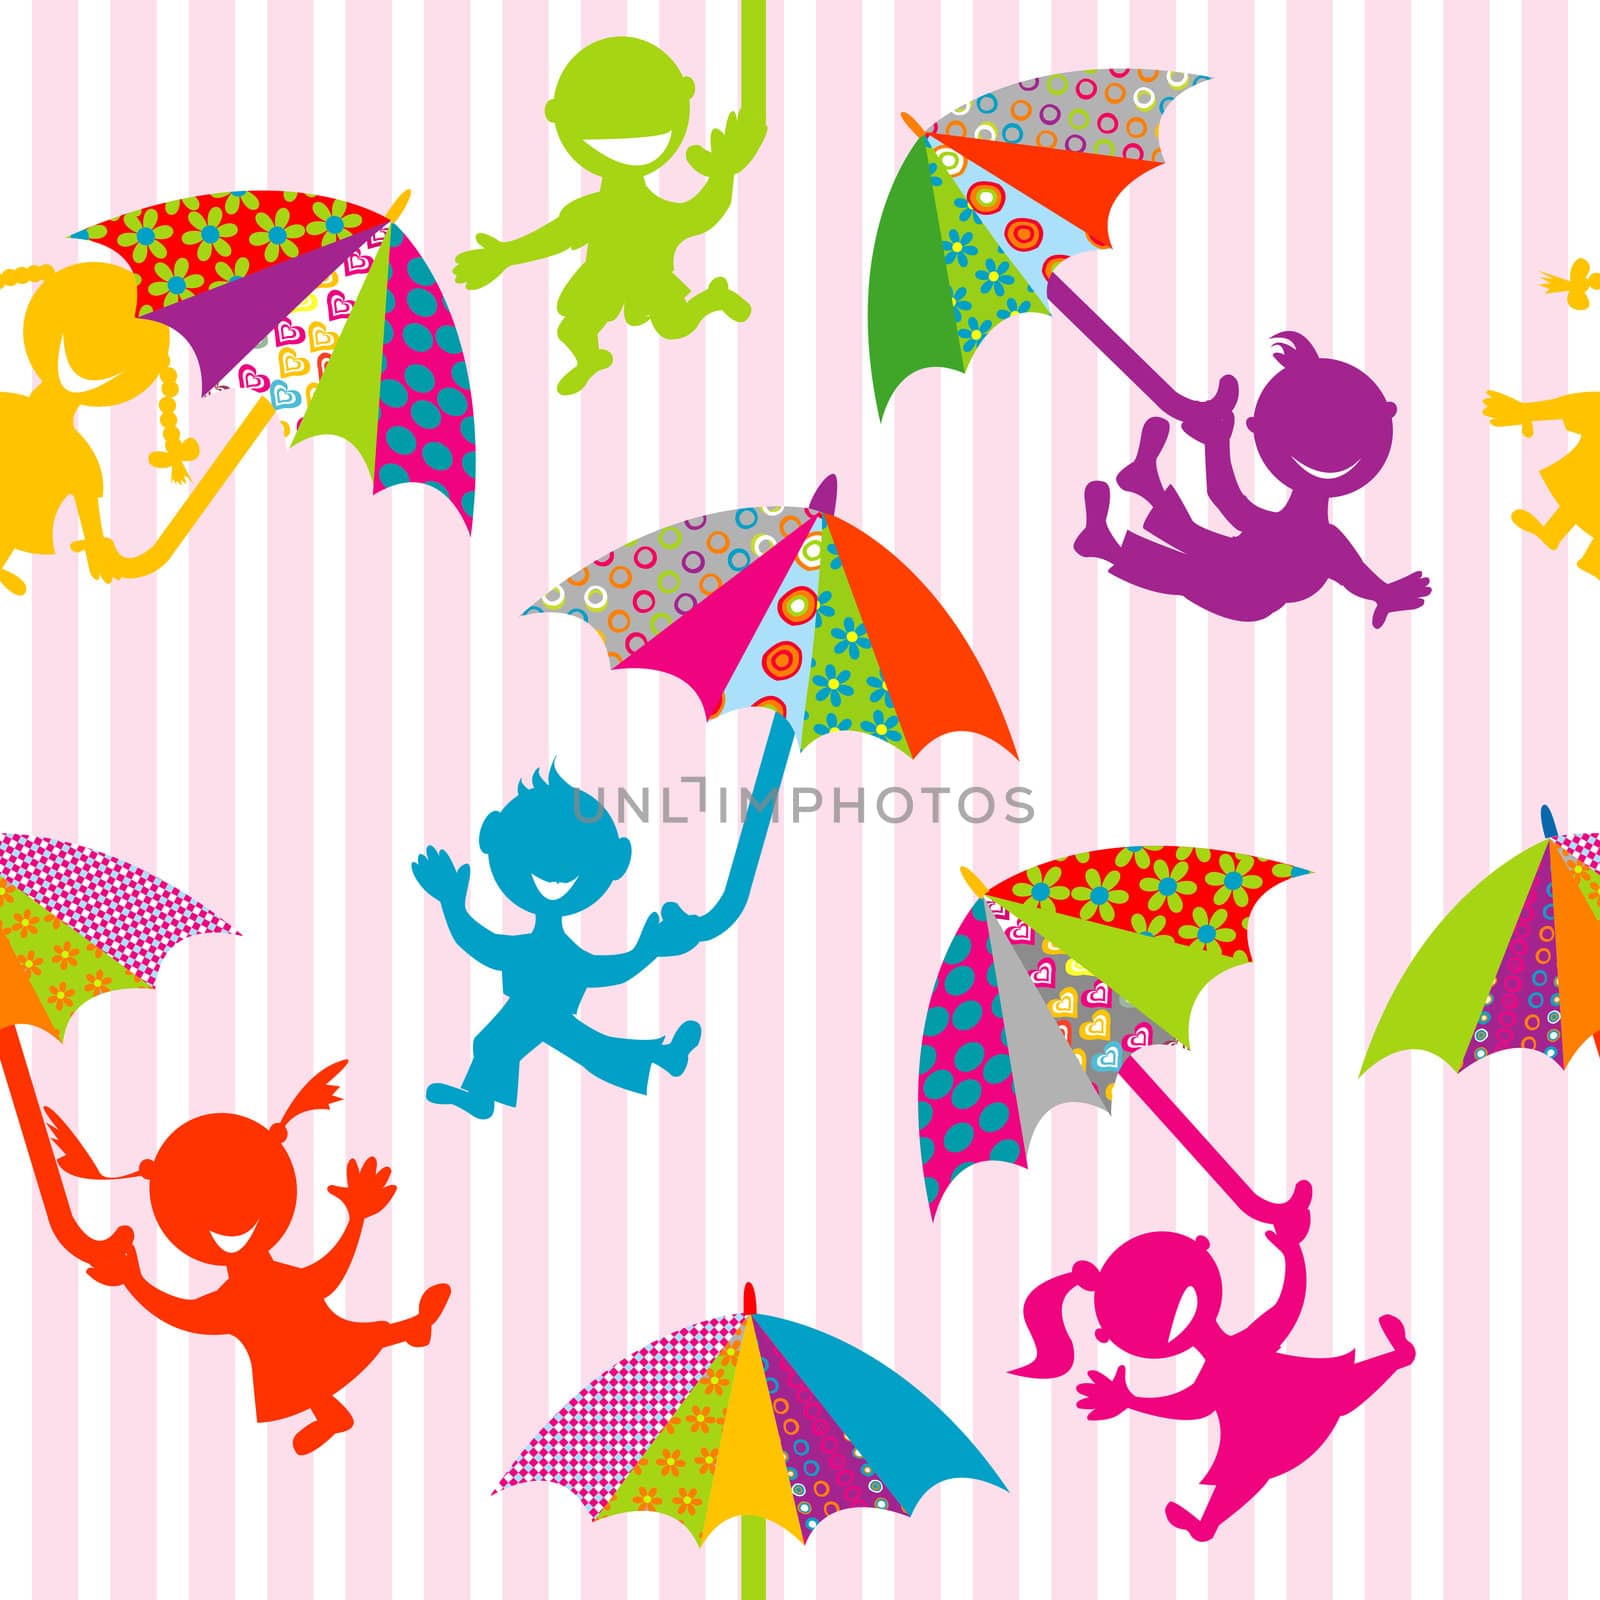 Children silhouettes with doodle umbrellas